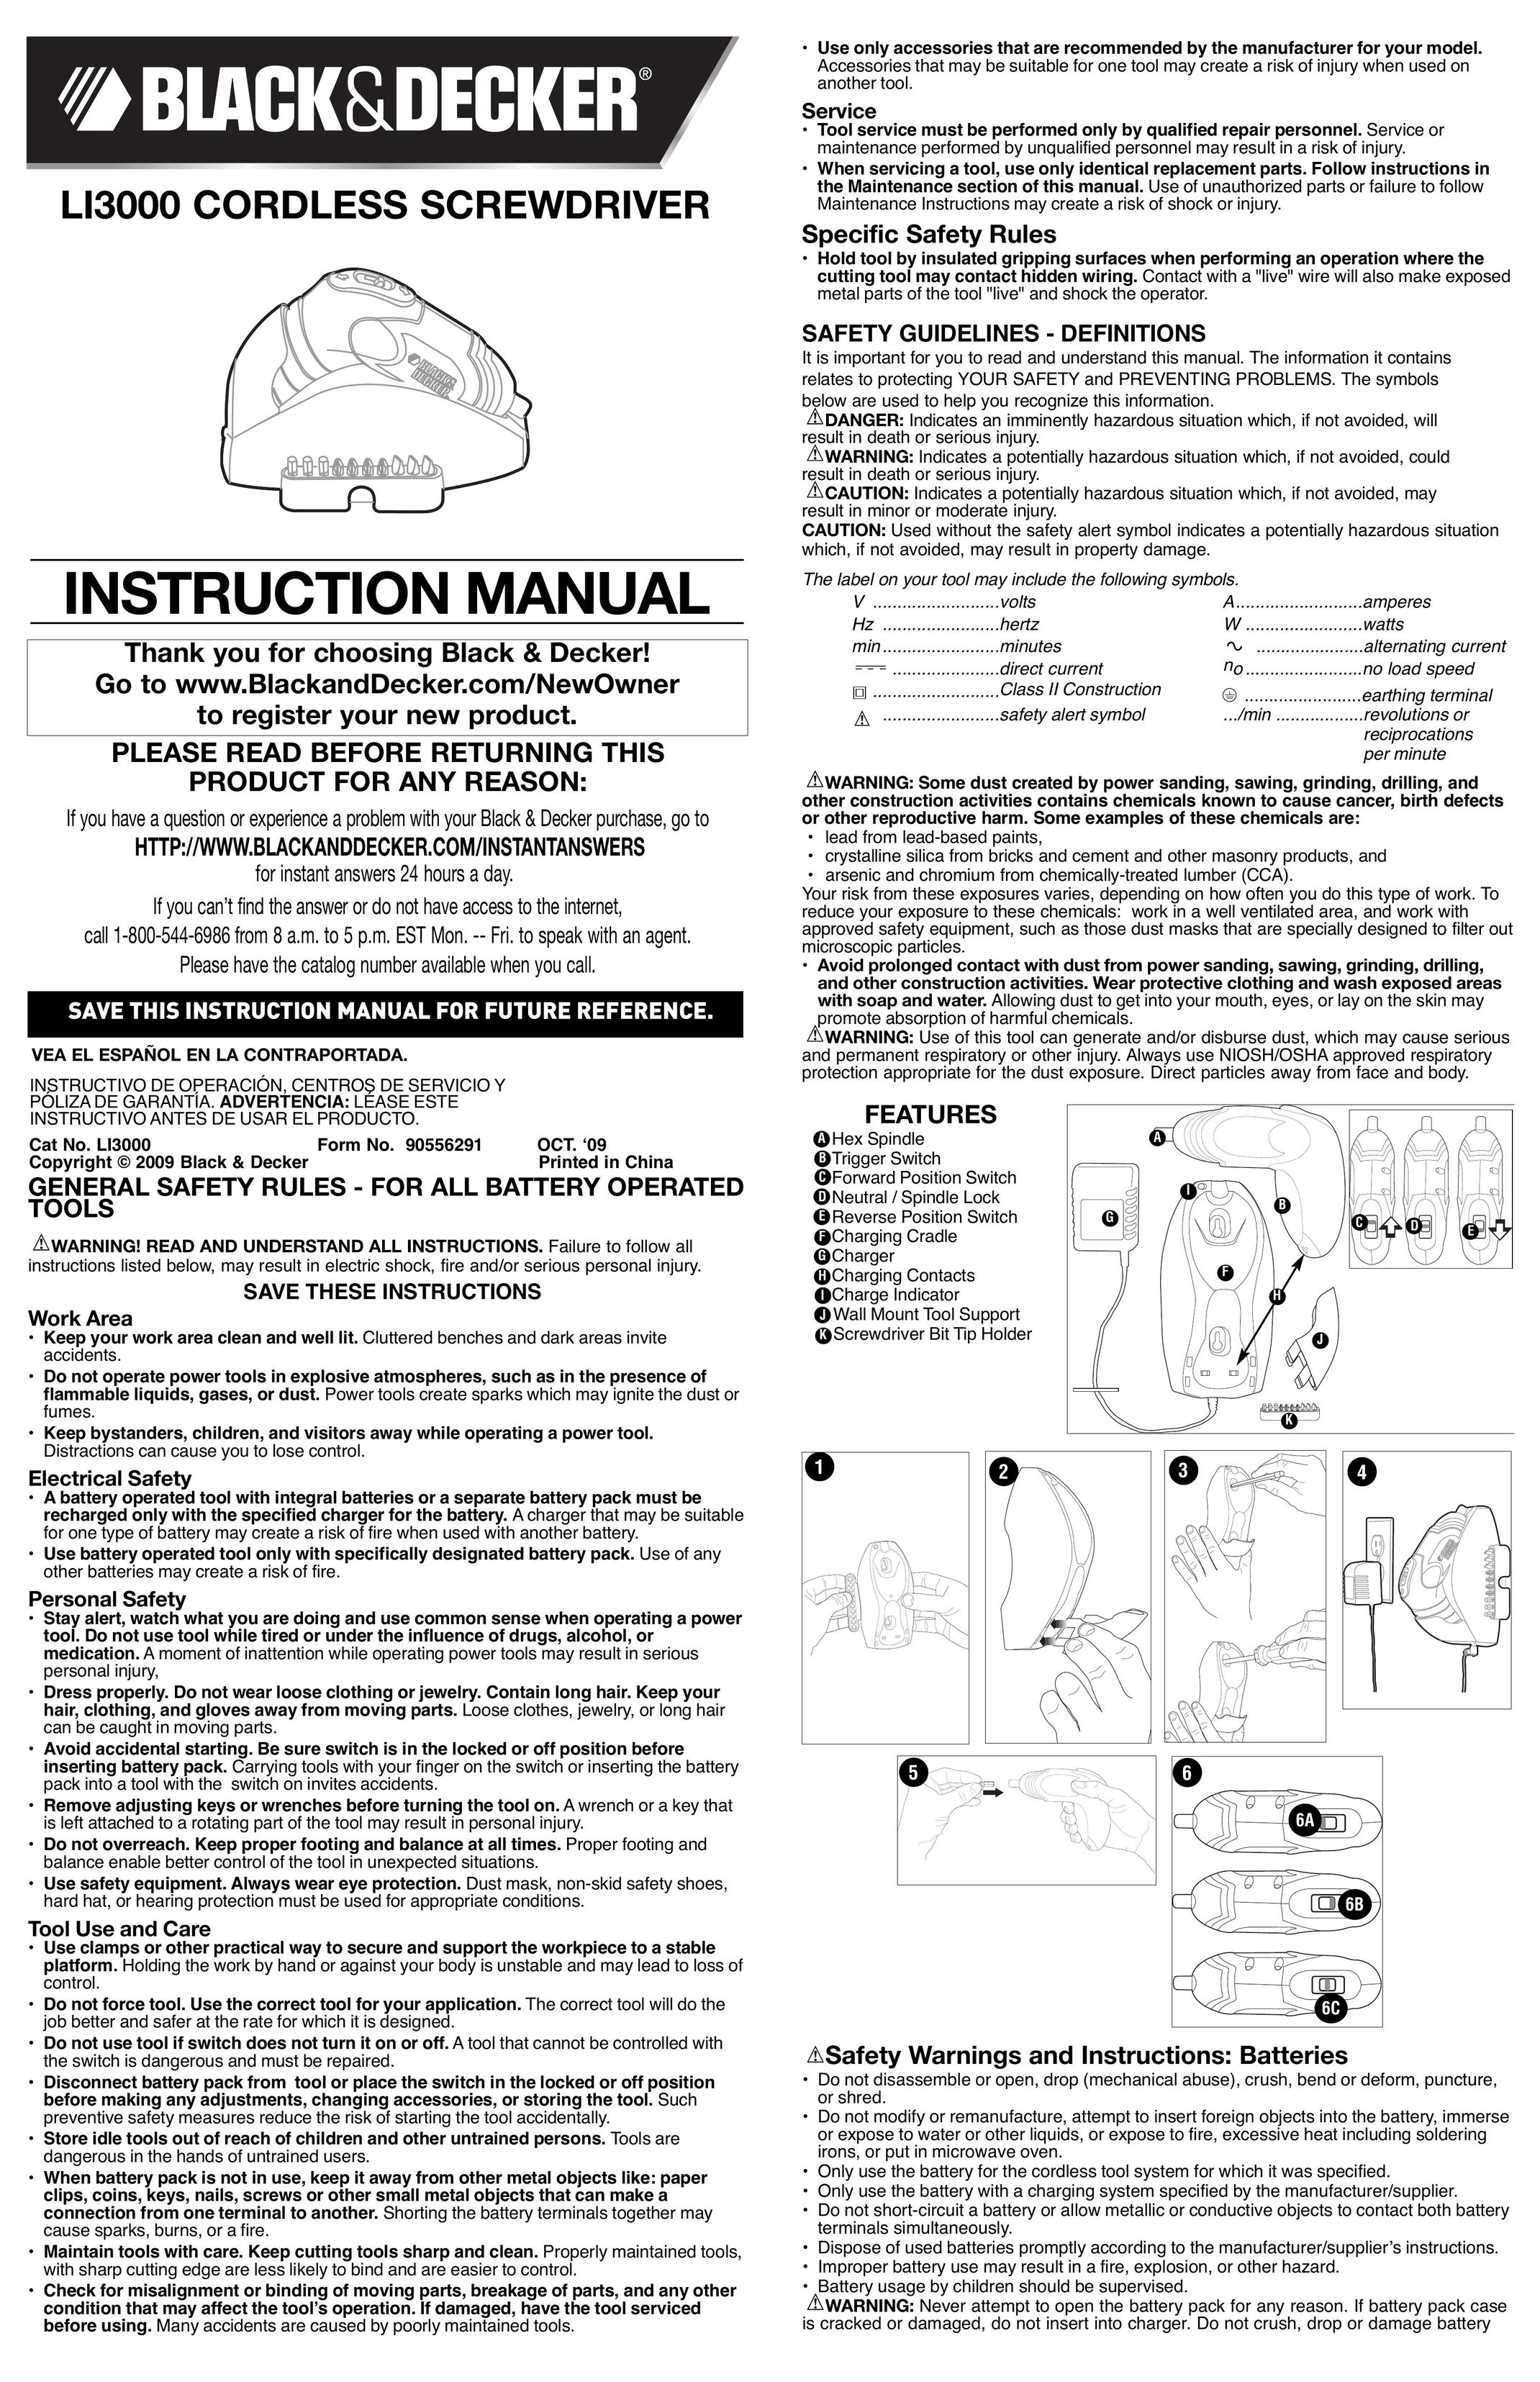 Black & Decker 90556291 Power Screwdriver User Manual